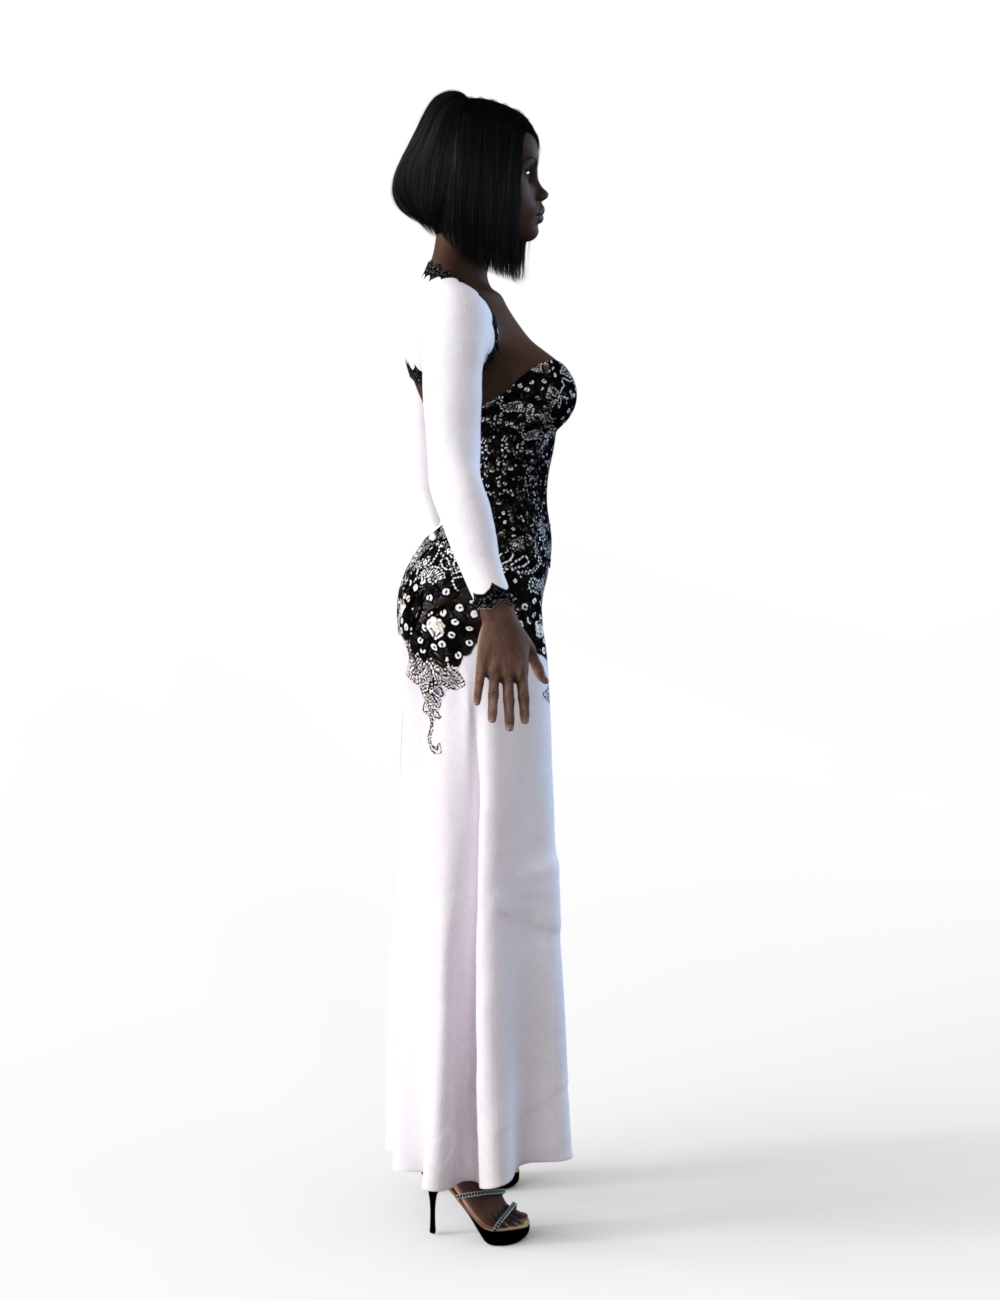 FBX- Lynsey Corset Dress by: Paleo, 3D Models by Daz 3D